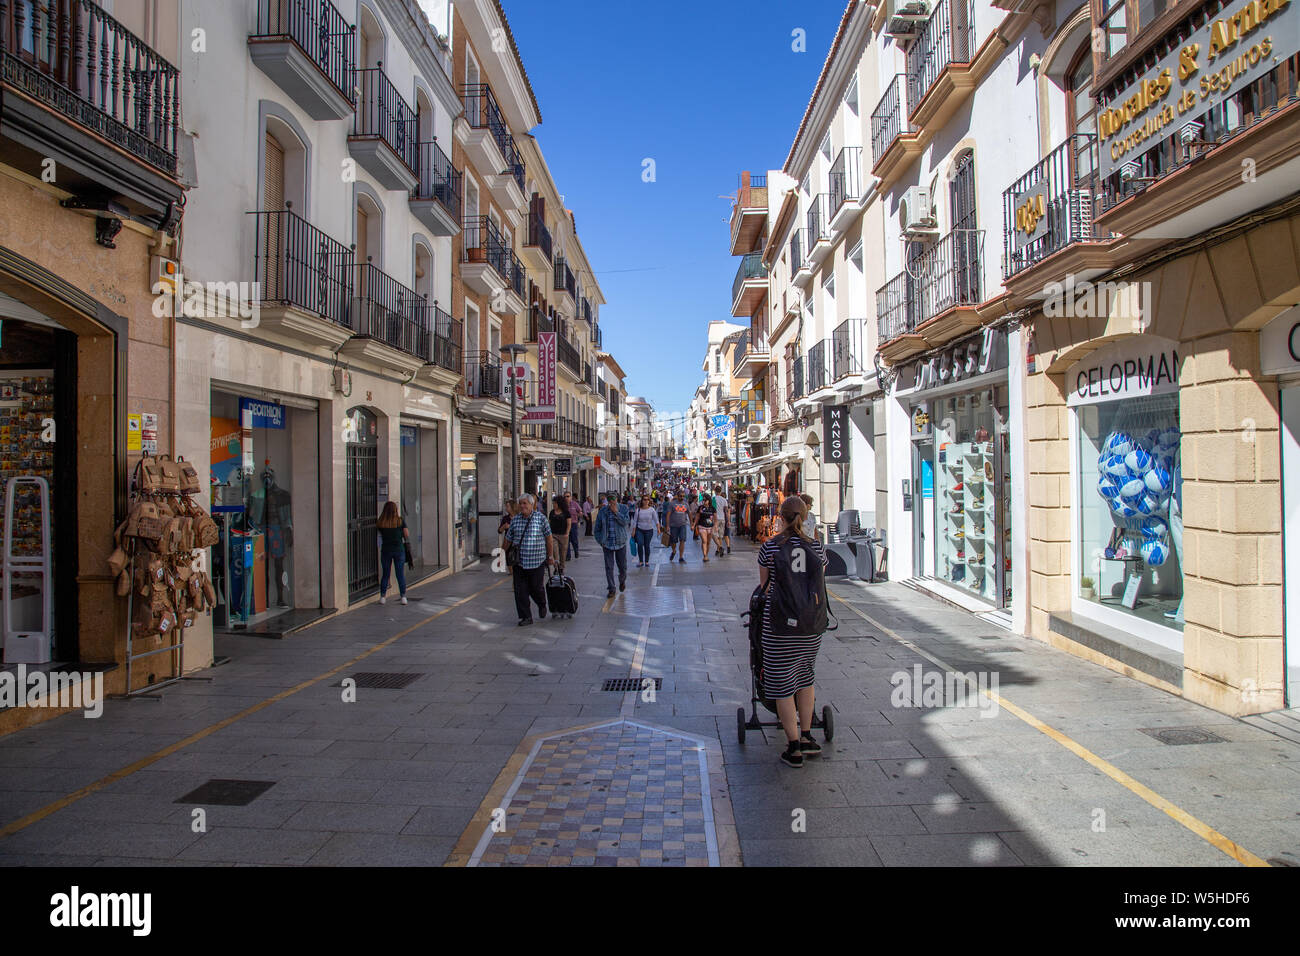 Shopping street in Ronda, Spain Stock Photo - Alamy